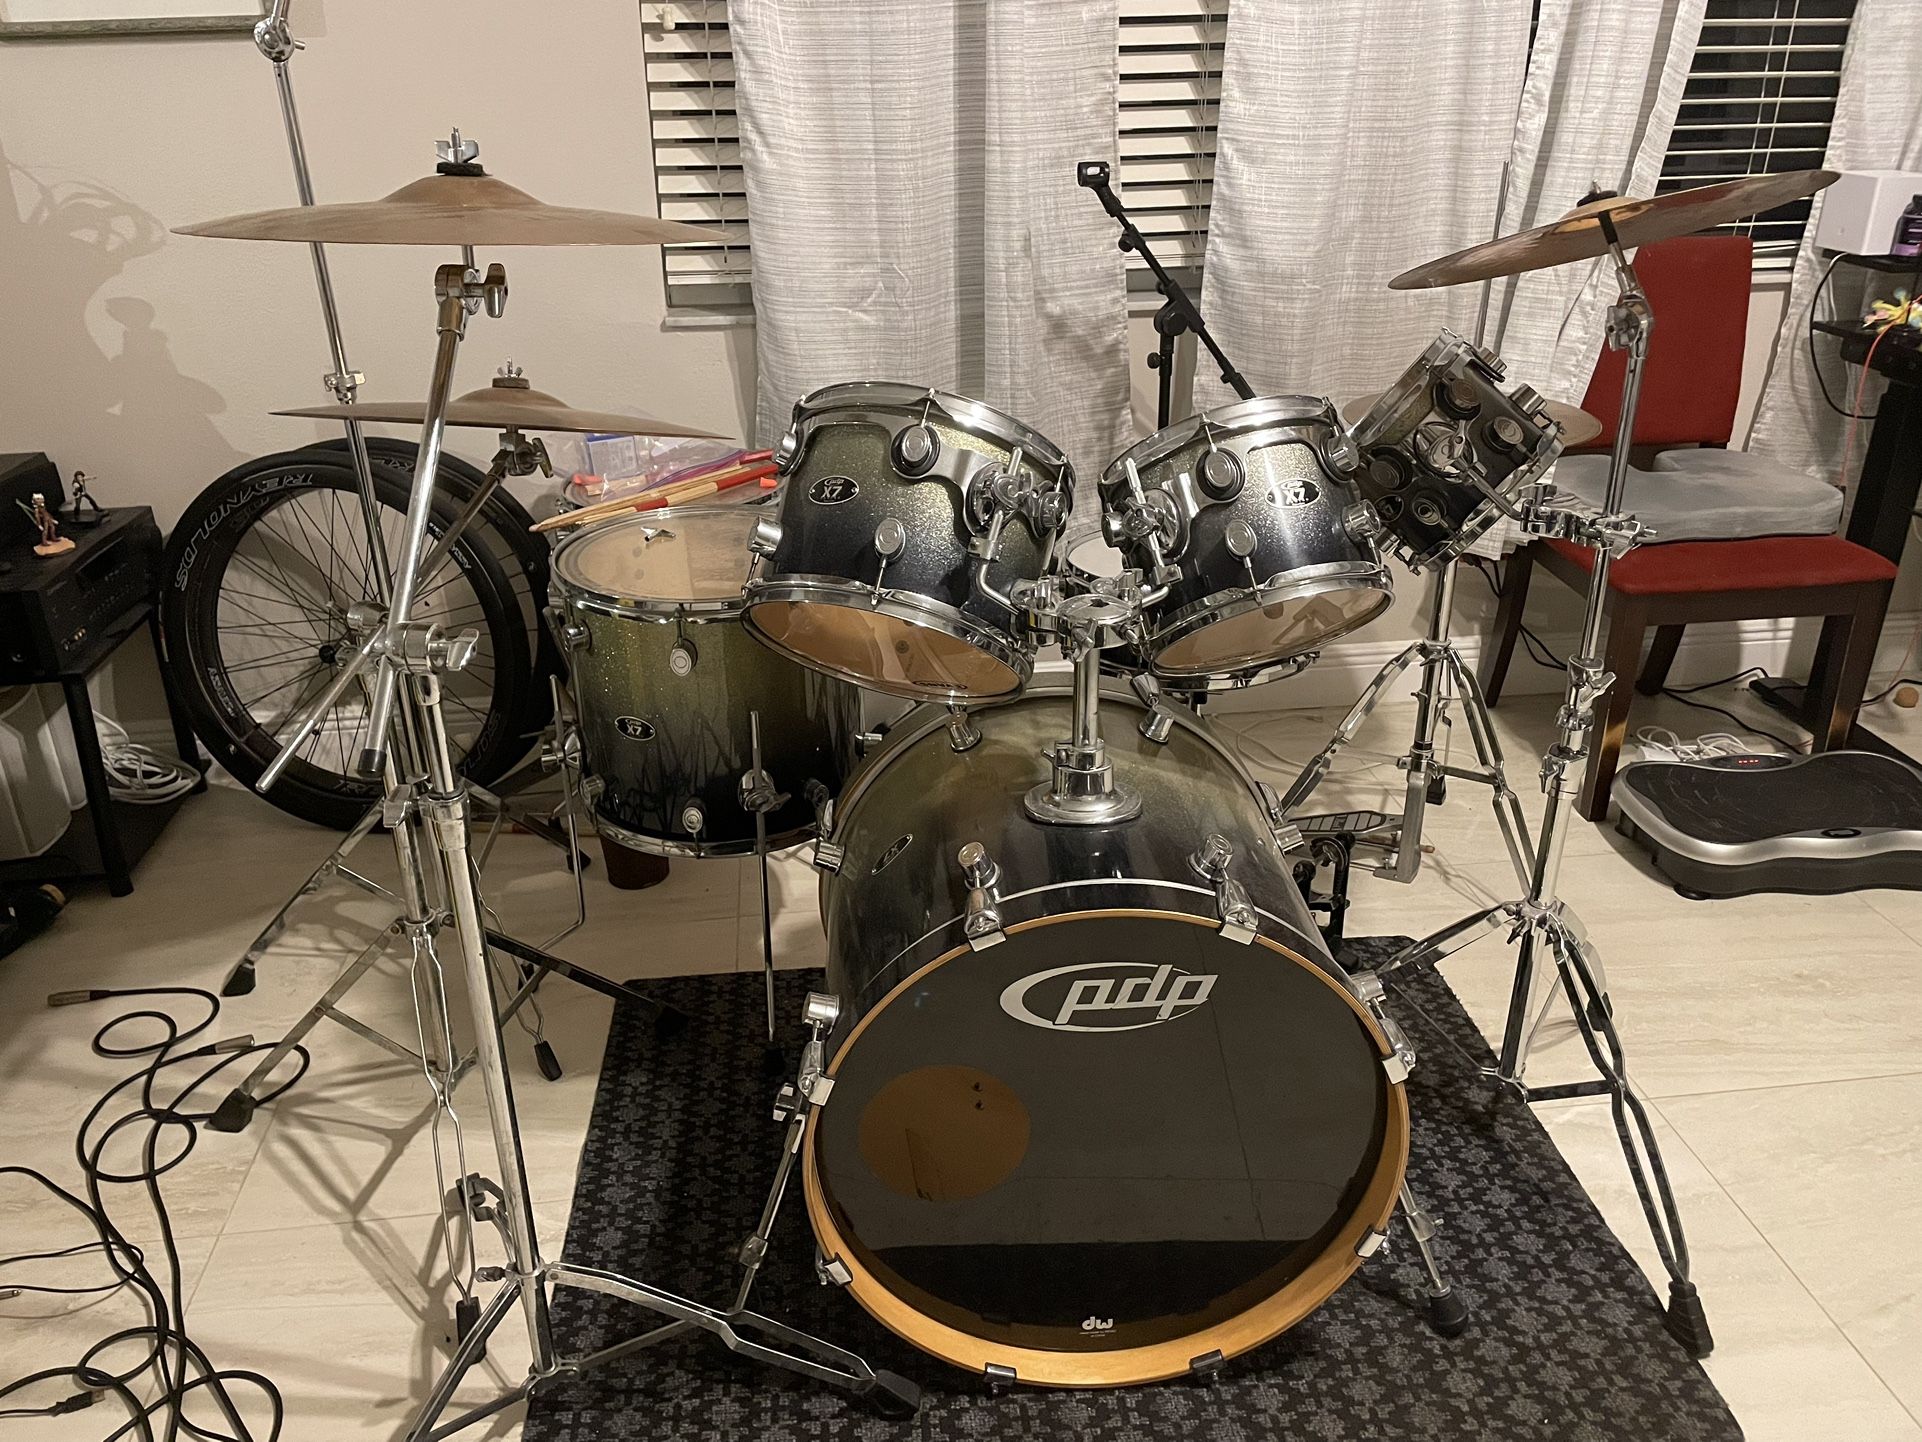 7 Piece pdp drum kit